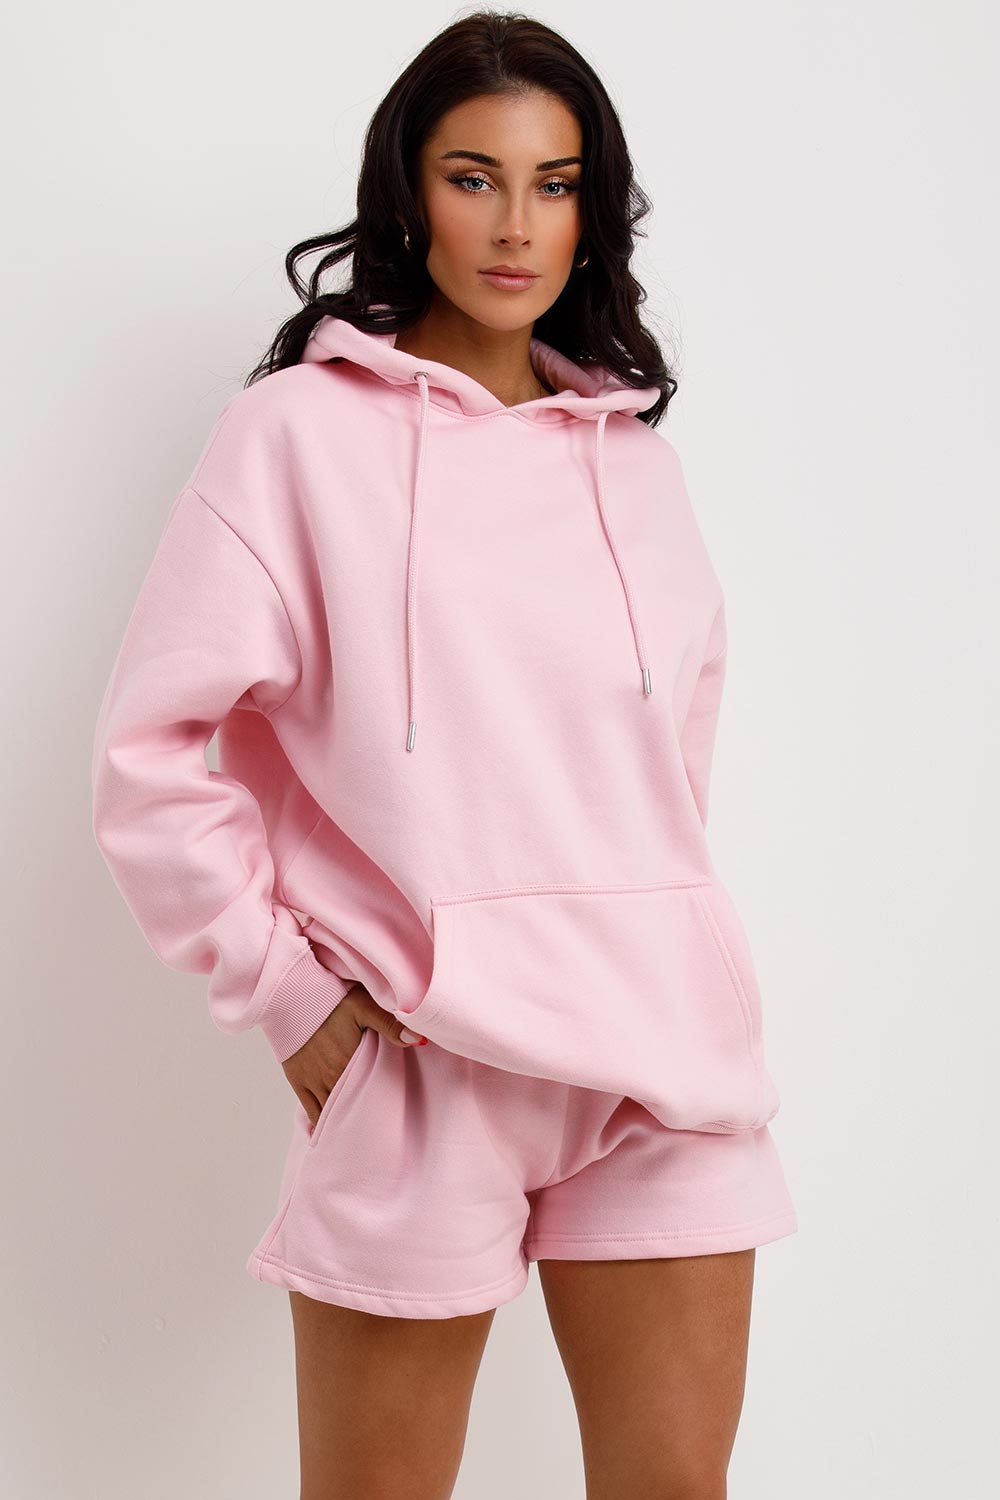 hooded sweatshirt and shorts tracksuit set pink loungewear set